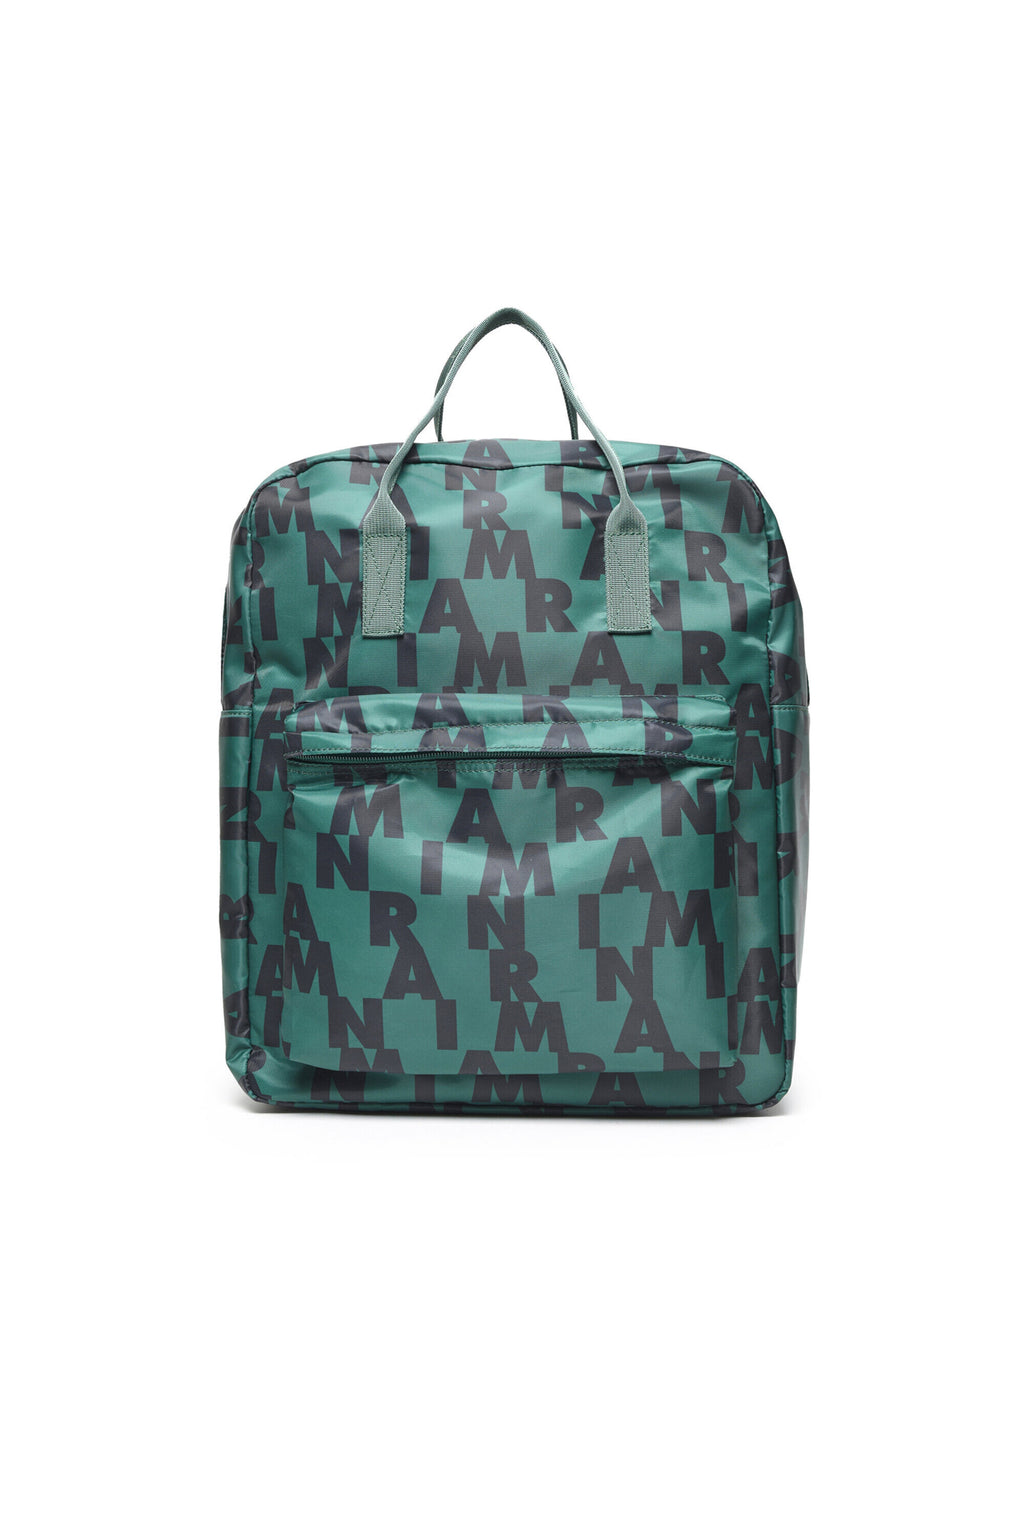 Marni allover patterned backpack